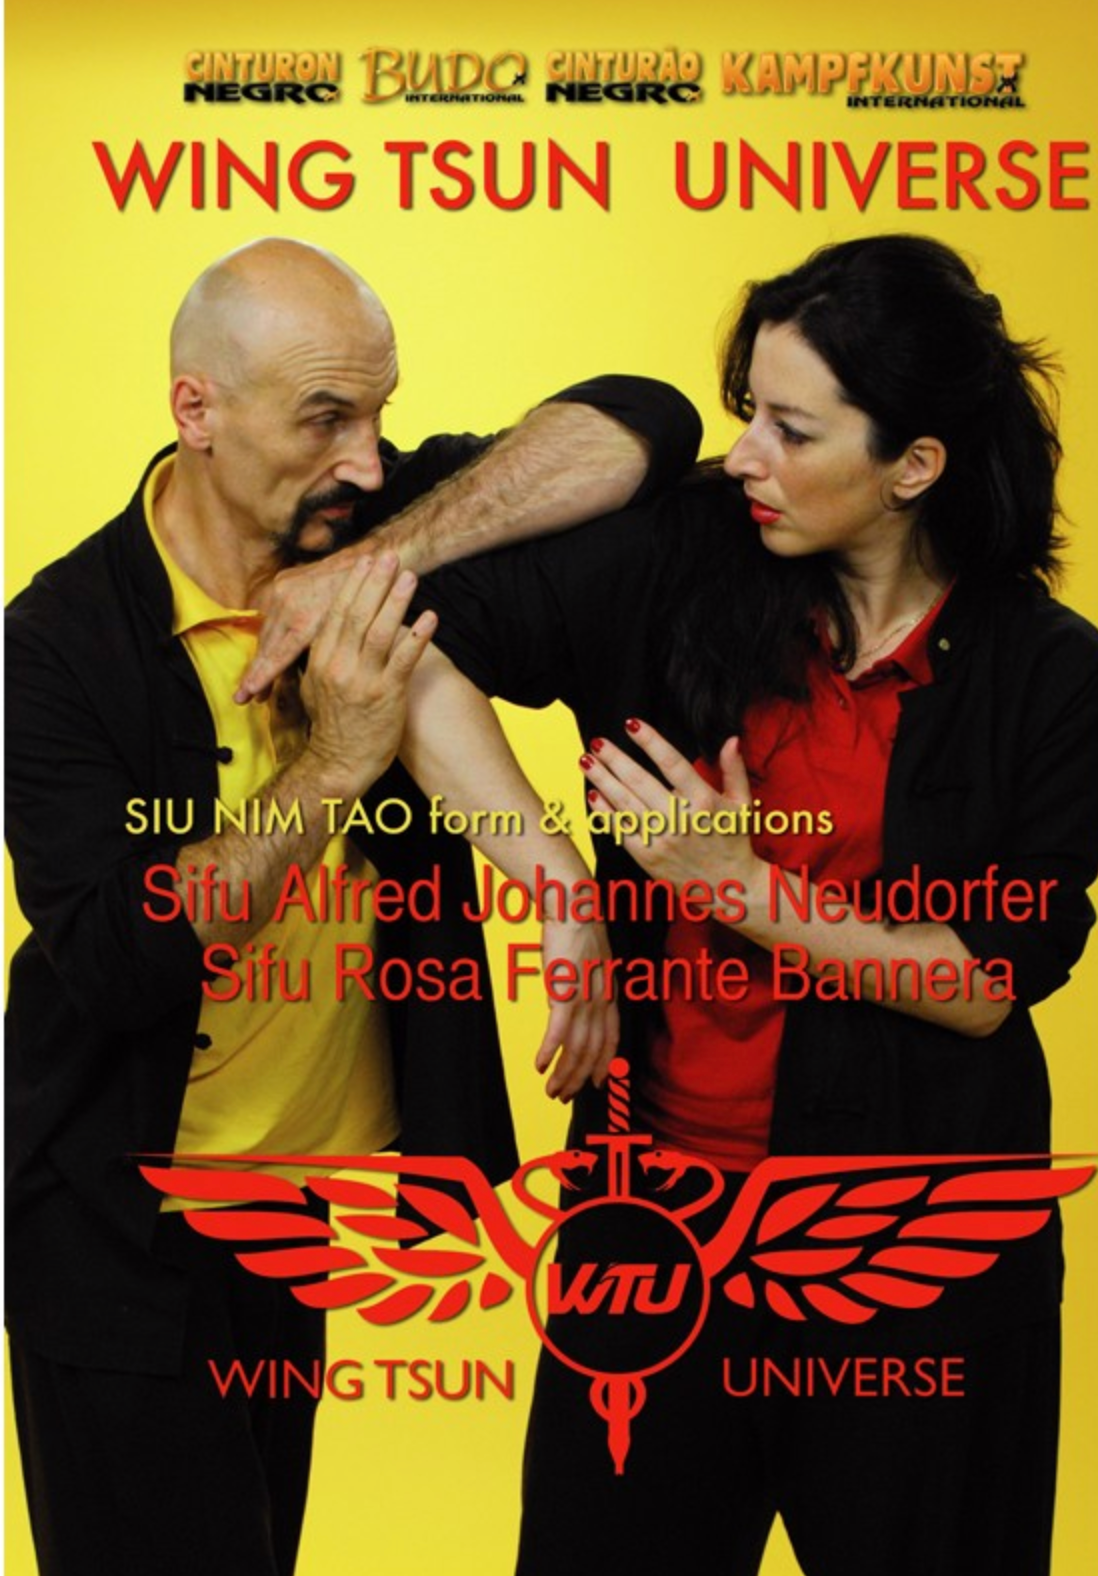 Wing Tsun Universe: Siu Nim Tao Form & Applications DVD with A. Neudorfer & R. Ferrante - Budovideos Inc